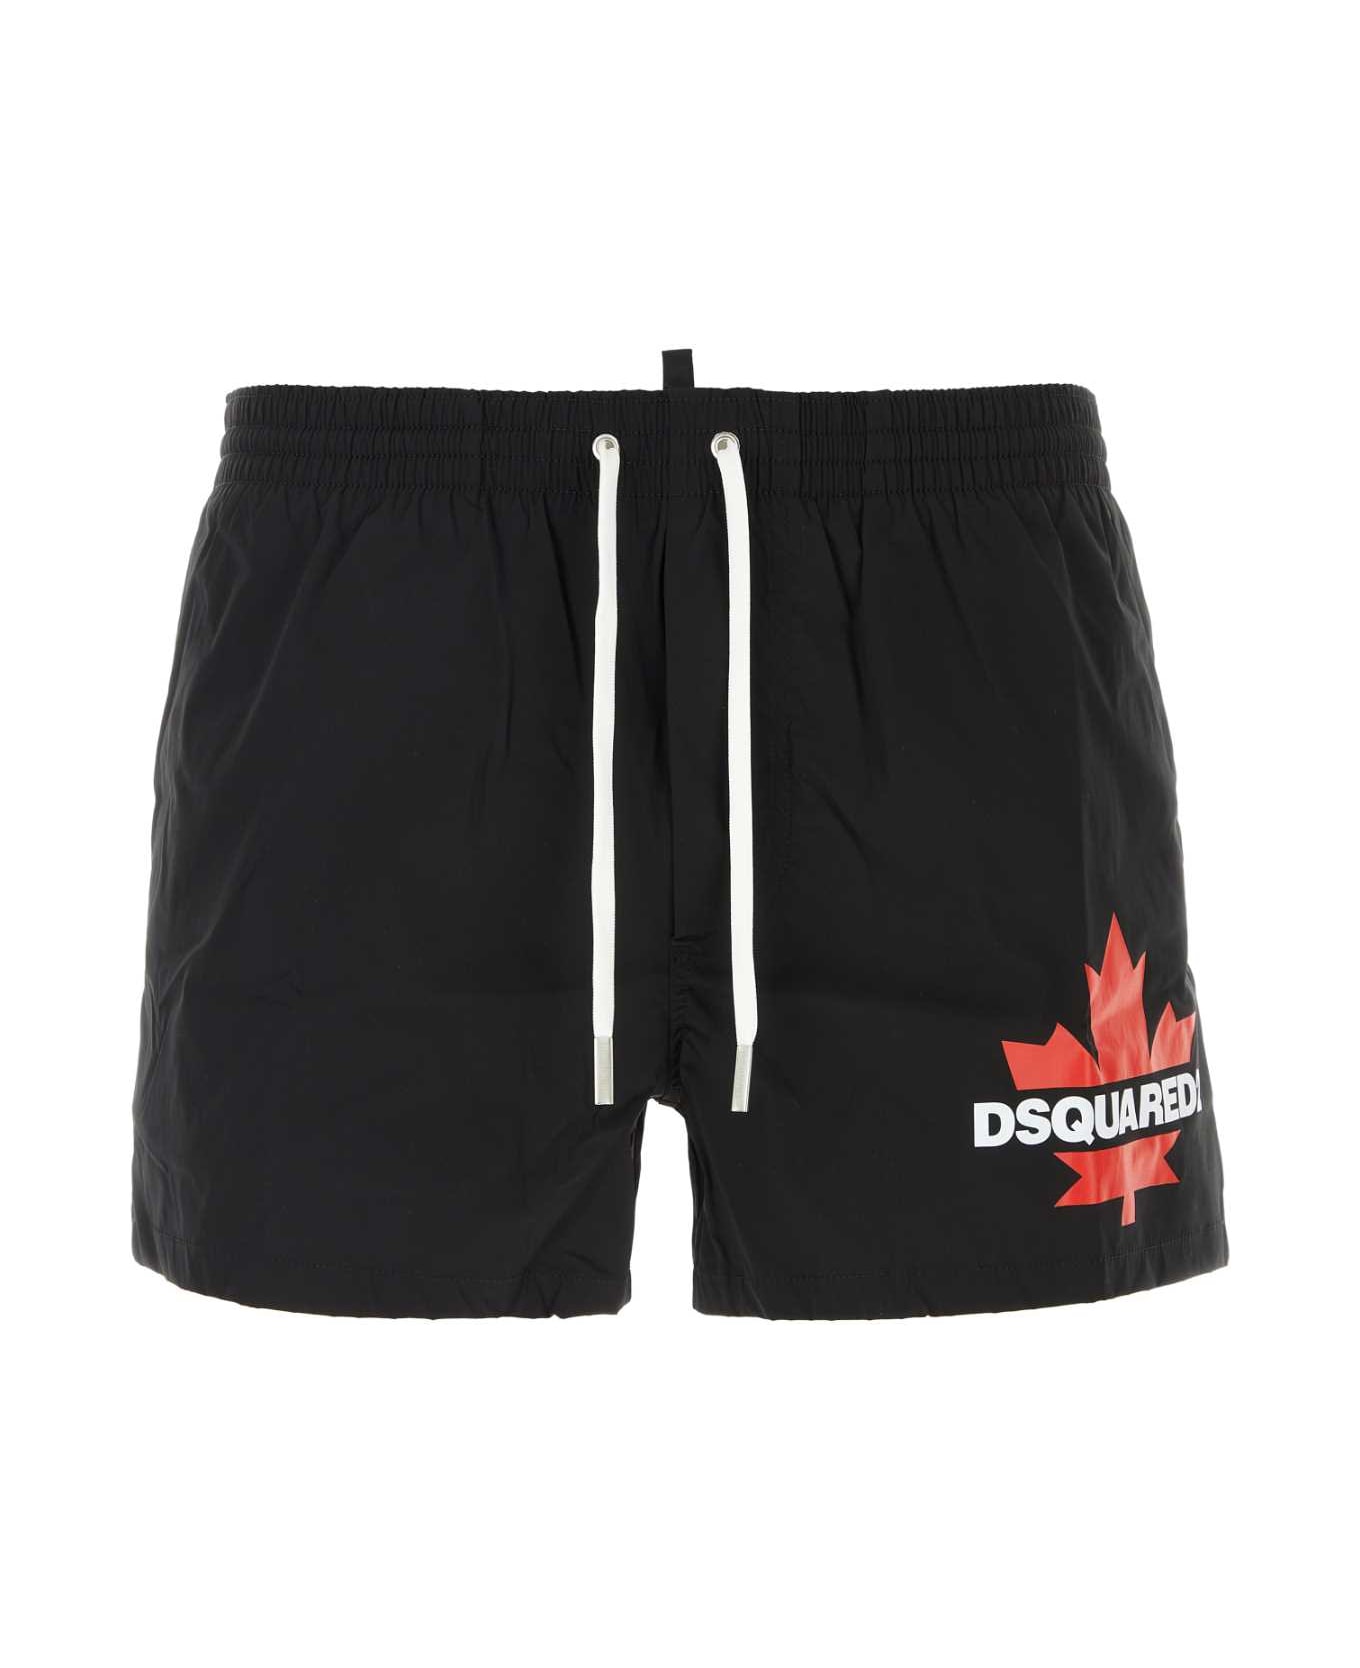 Dsquared2 Black Stretch Nylon Swimming Shorts - BLACK 水着